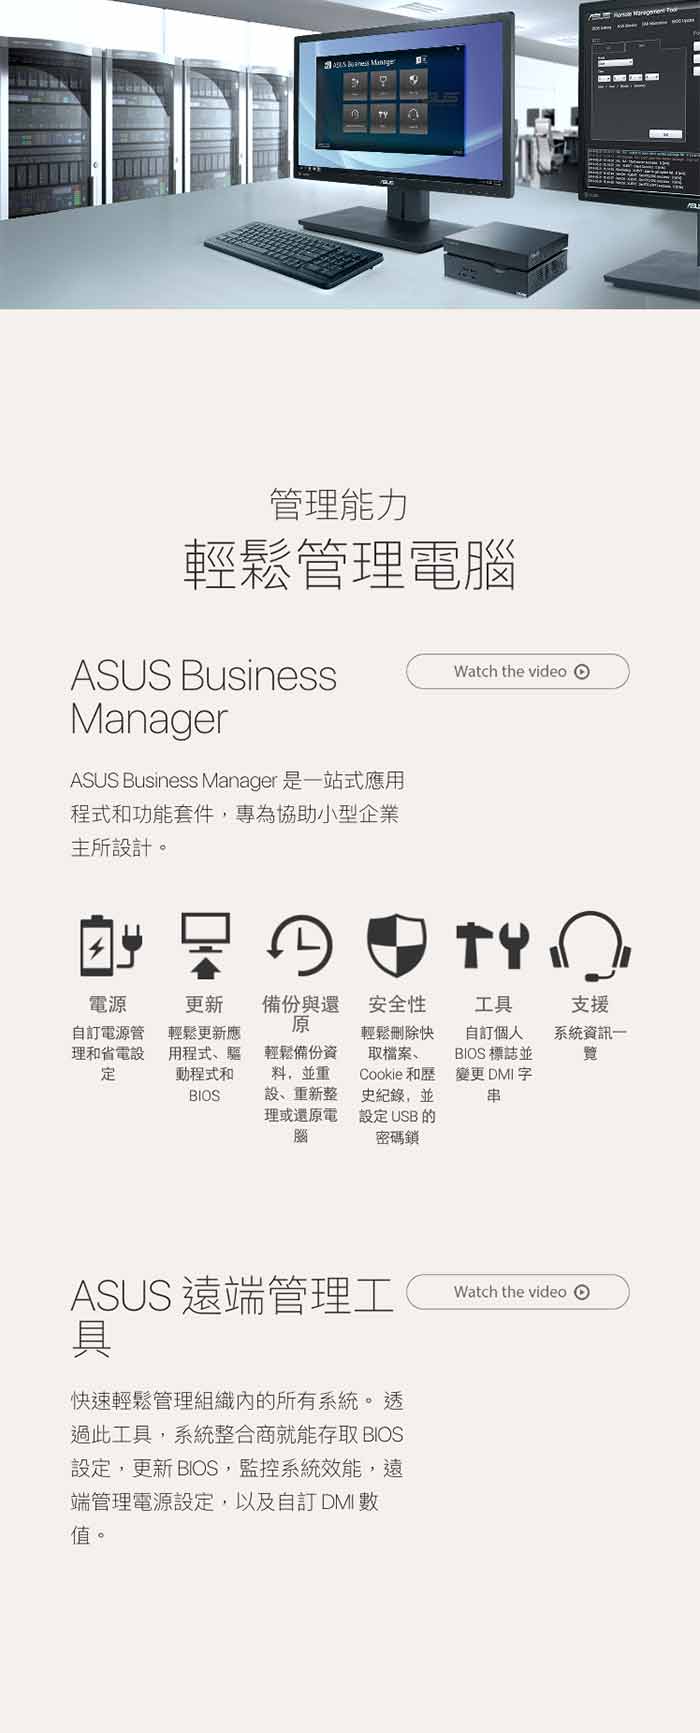 ASUS華碩 VC66迷你電腦(i3-7100/128G SSD/4G/Win10)